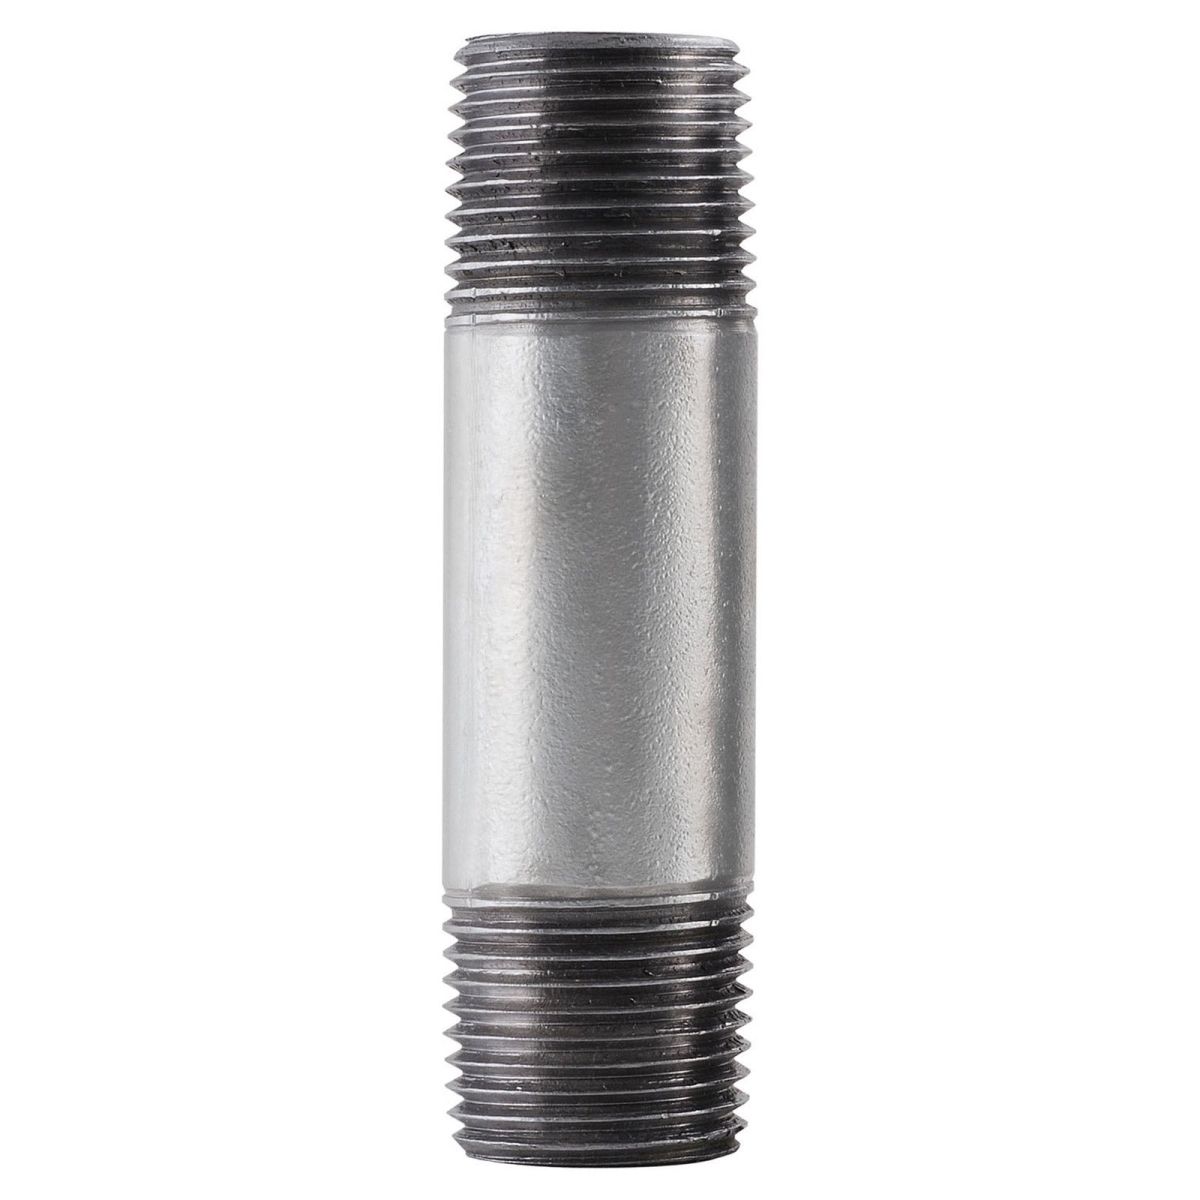 562-055hc 0.37 X 5.5 In. Galvanized Steel Nipple